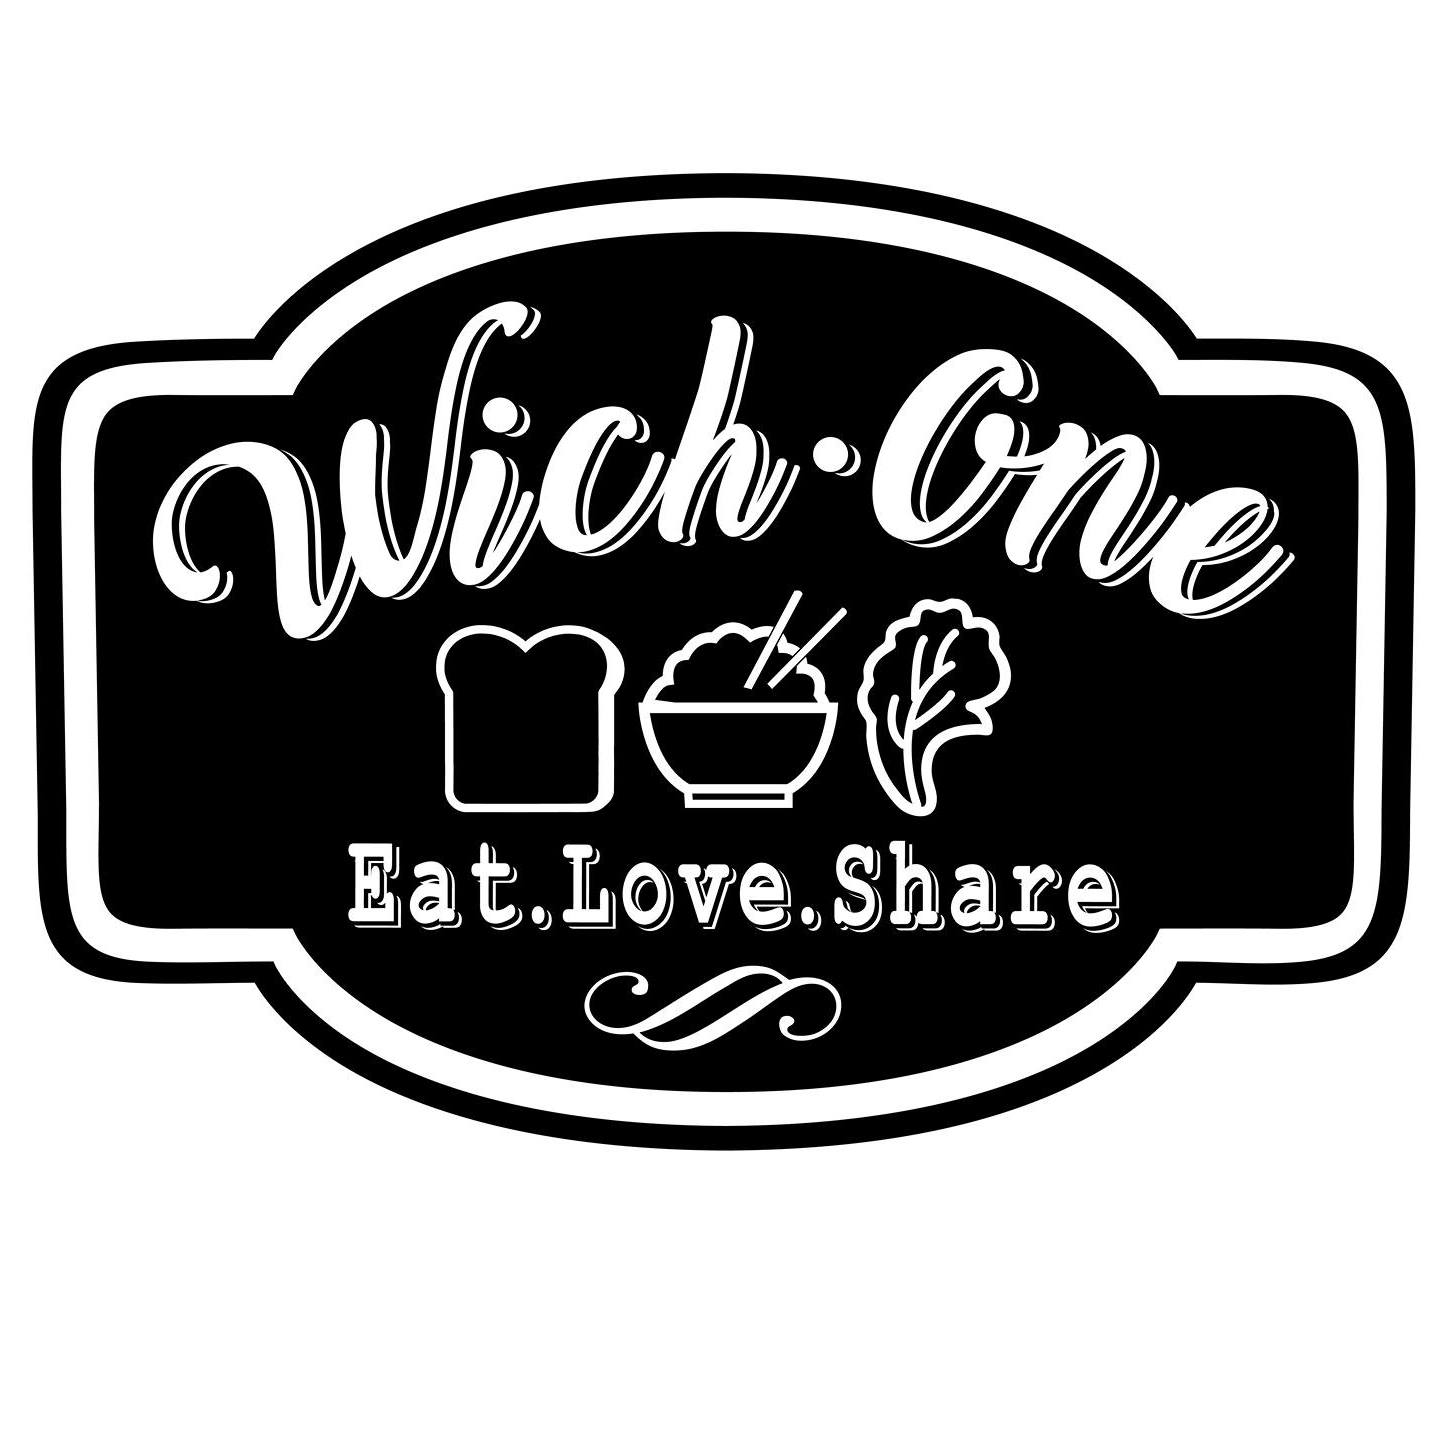 wich-one